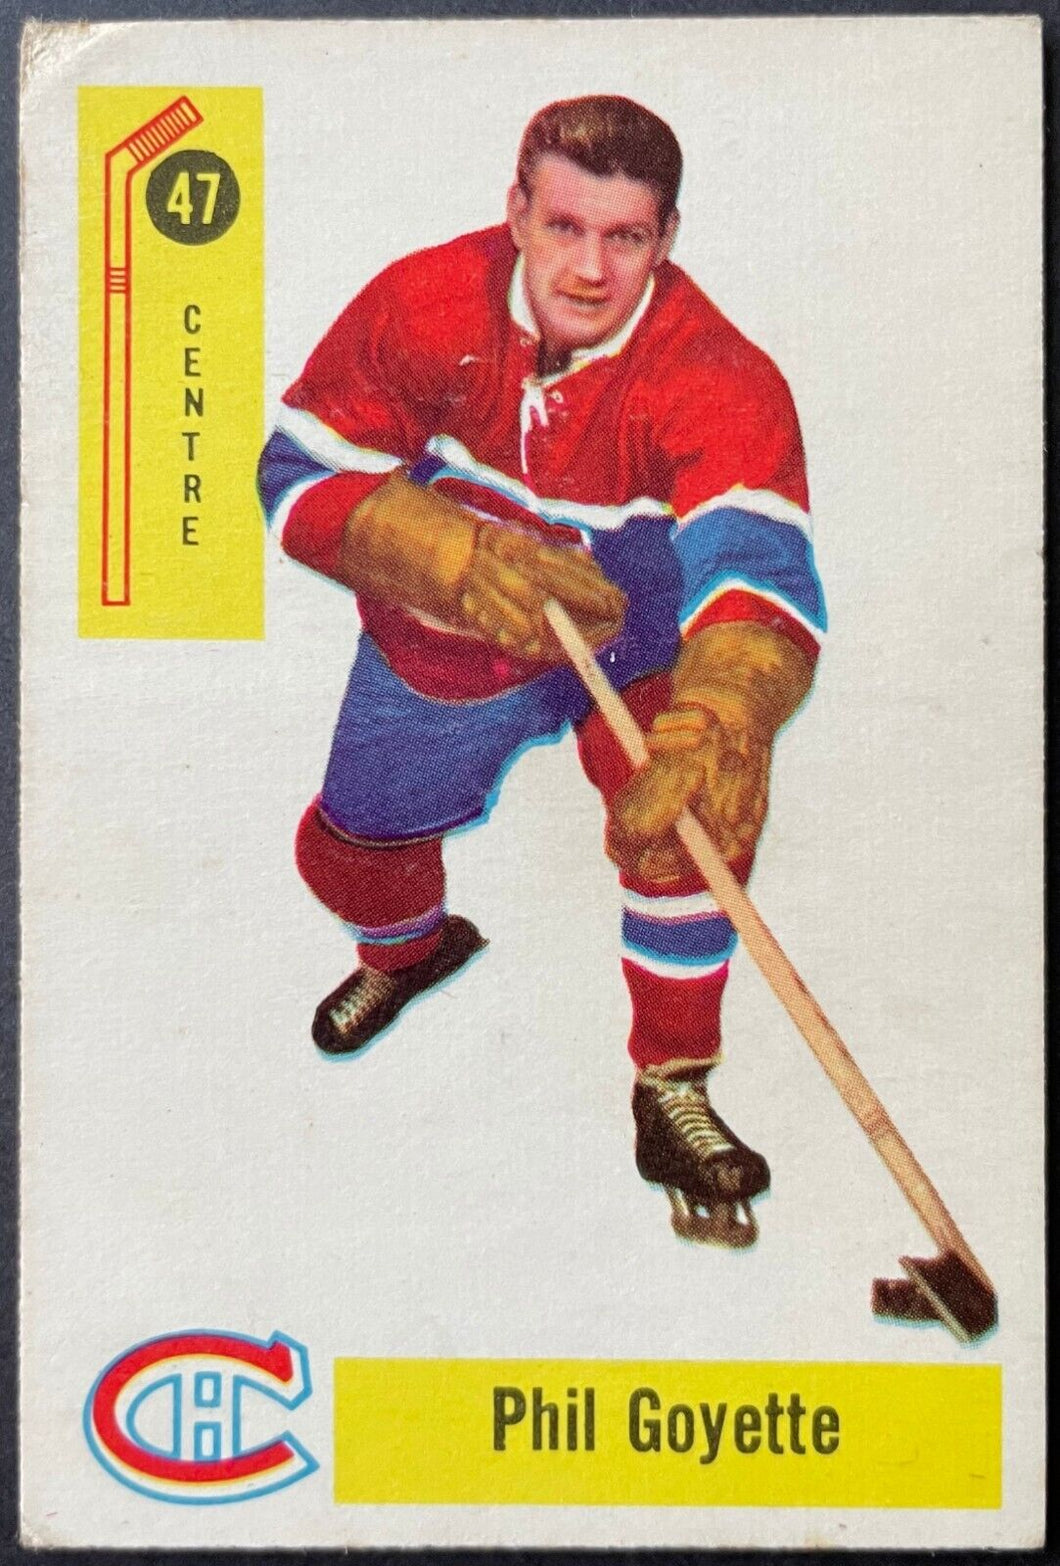 1958-59 Parkhurst Hockey Card #47 Phil Goyette Montreal Canadiens NHL Vintage